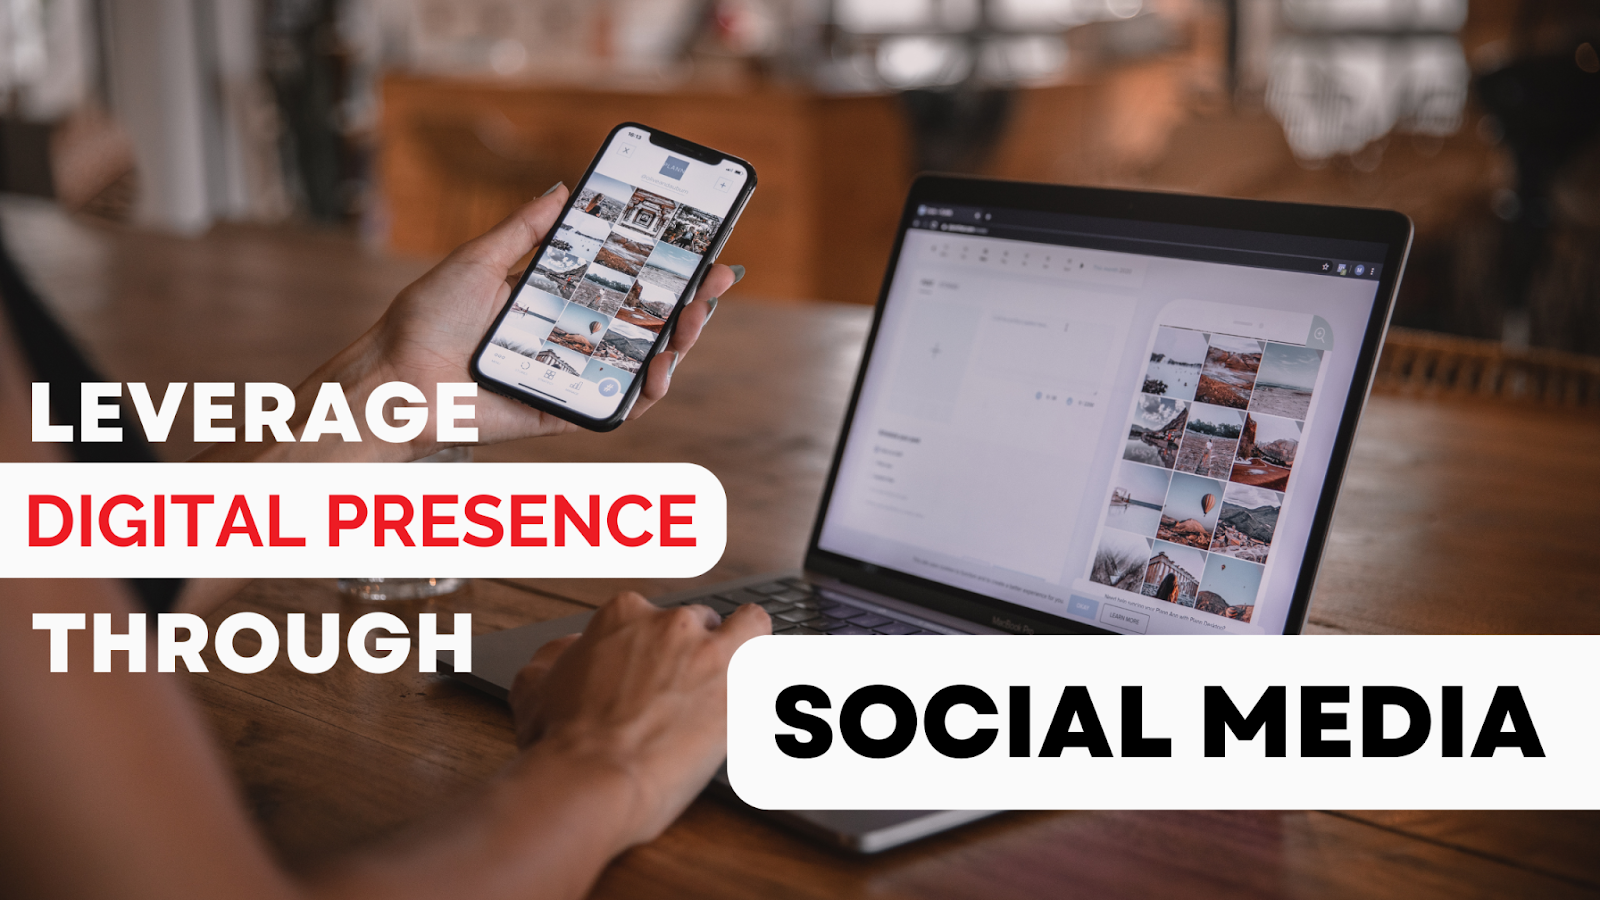 Leverage digital presence through social media